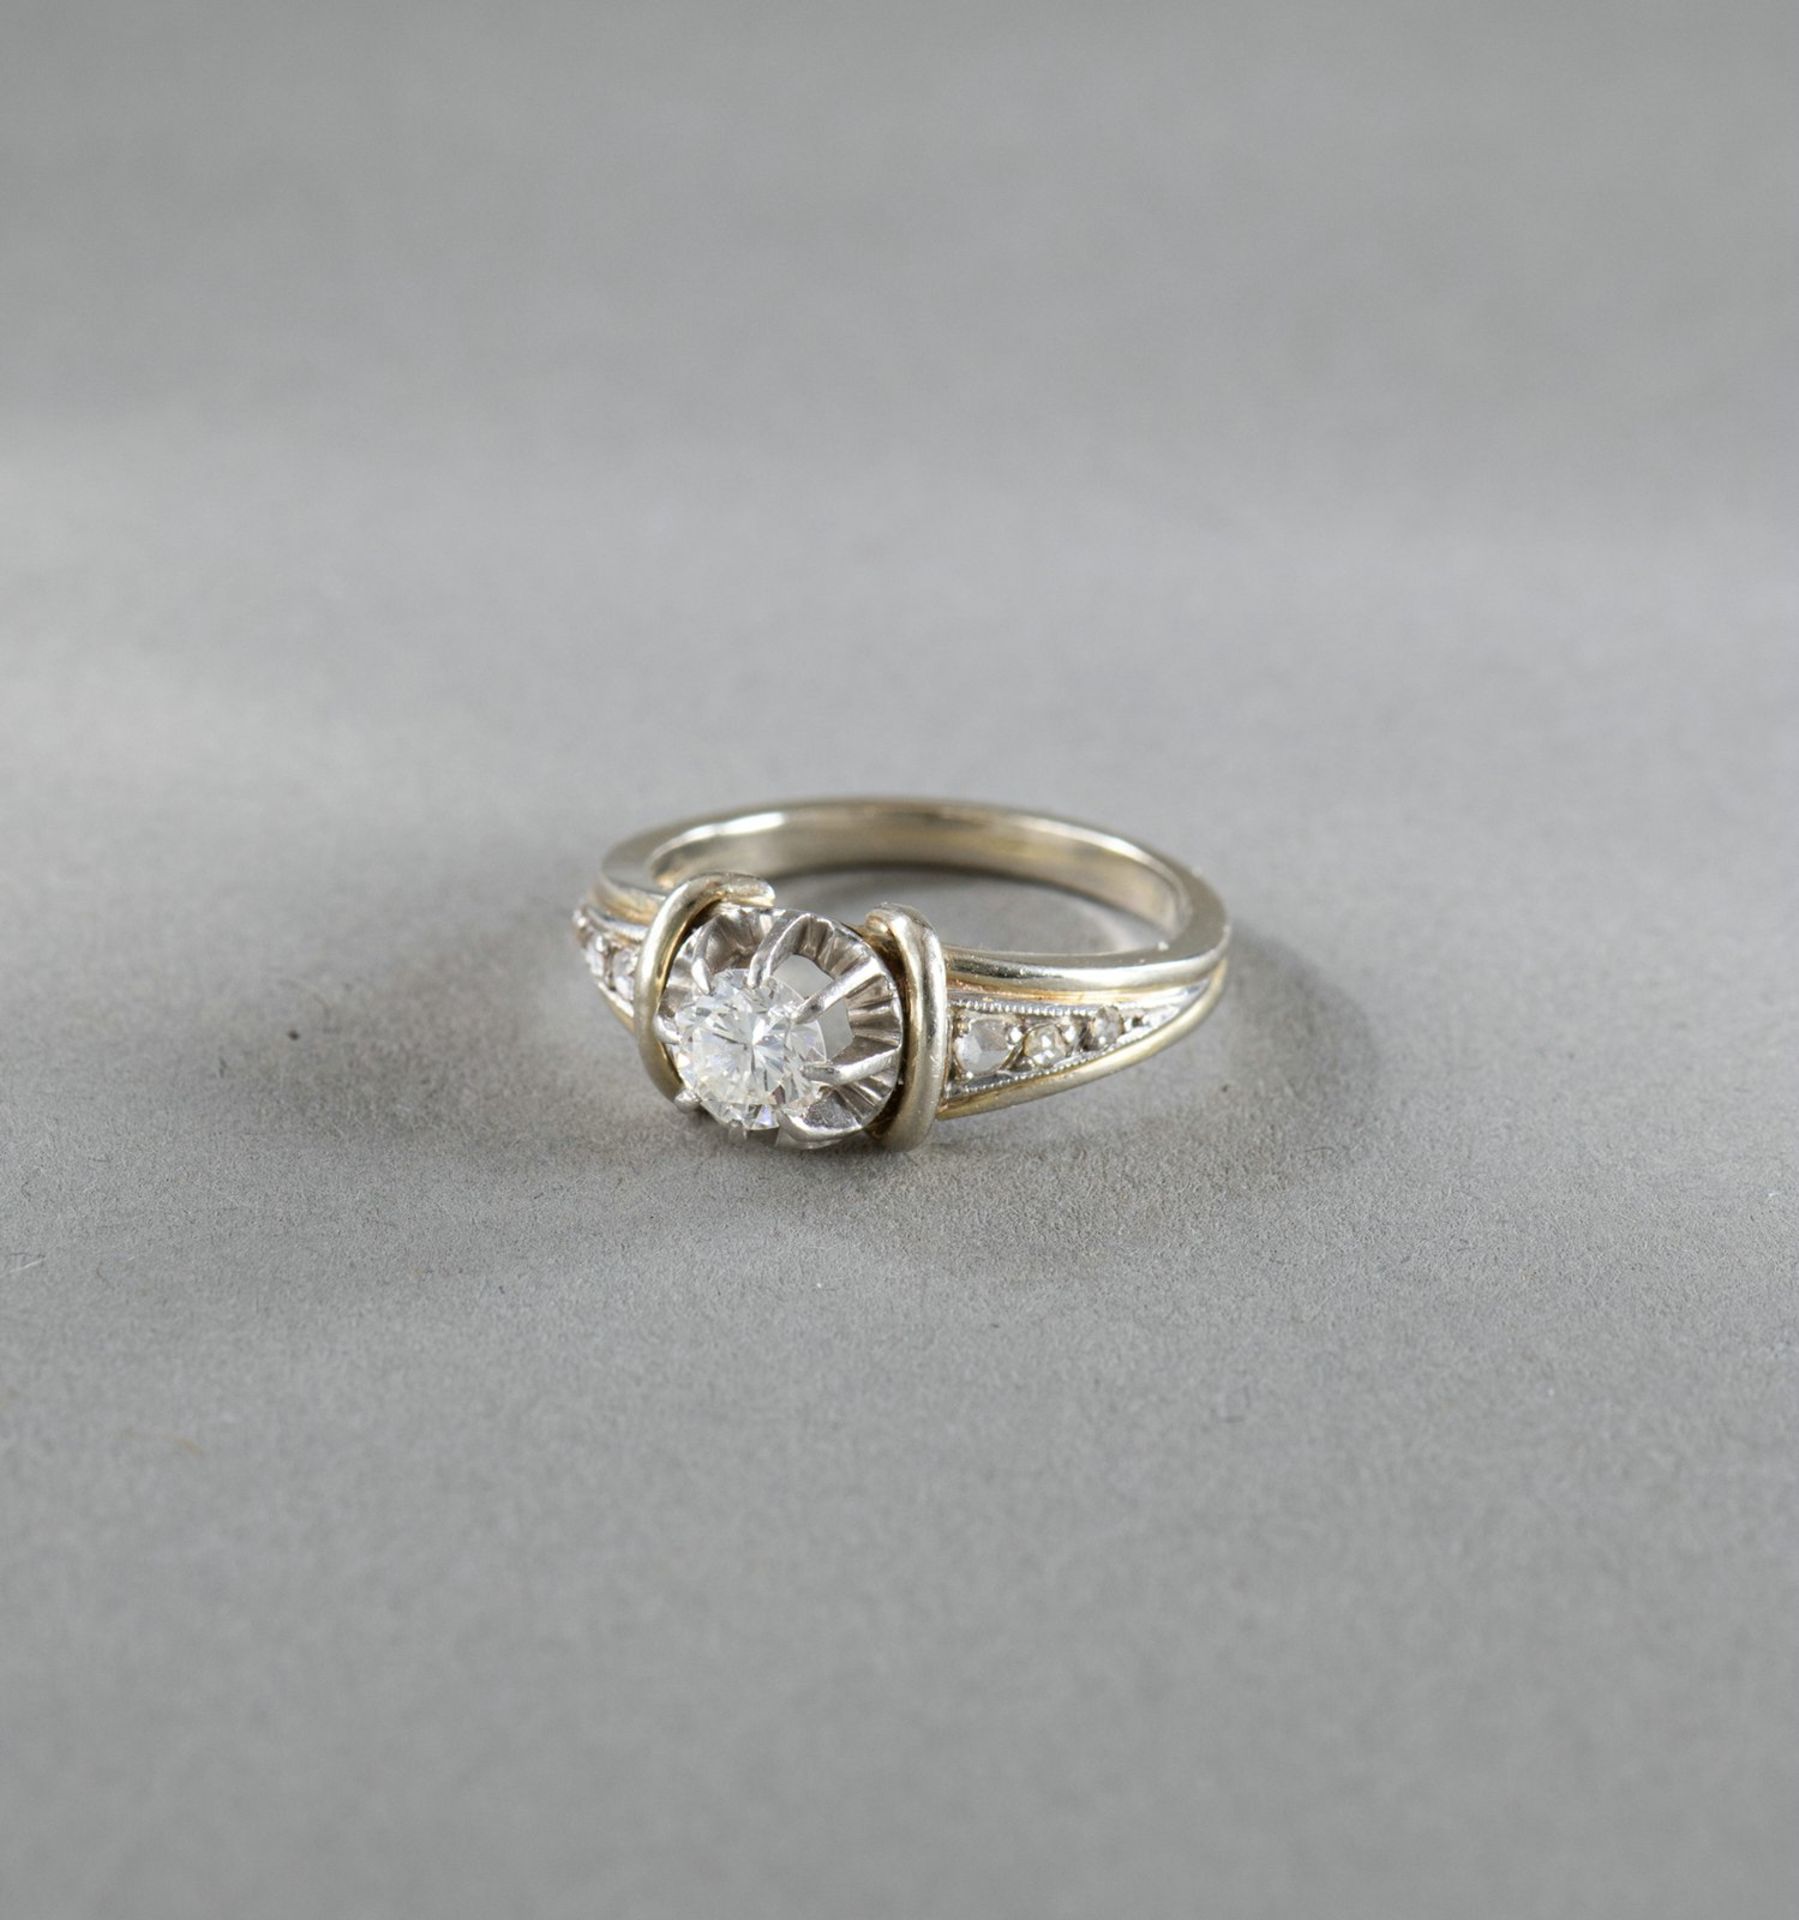 A DIAMOND RING - Image 4 of 7